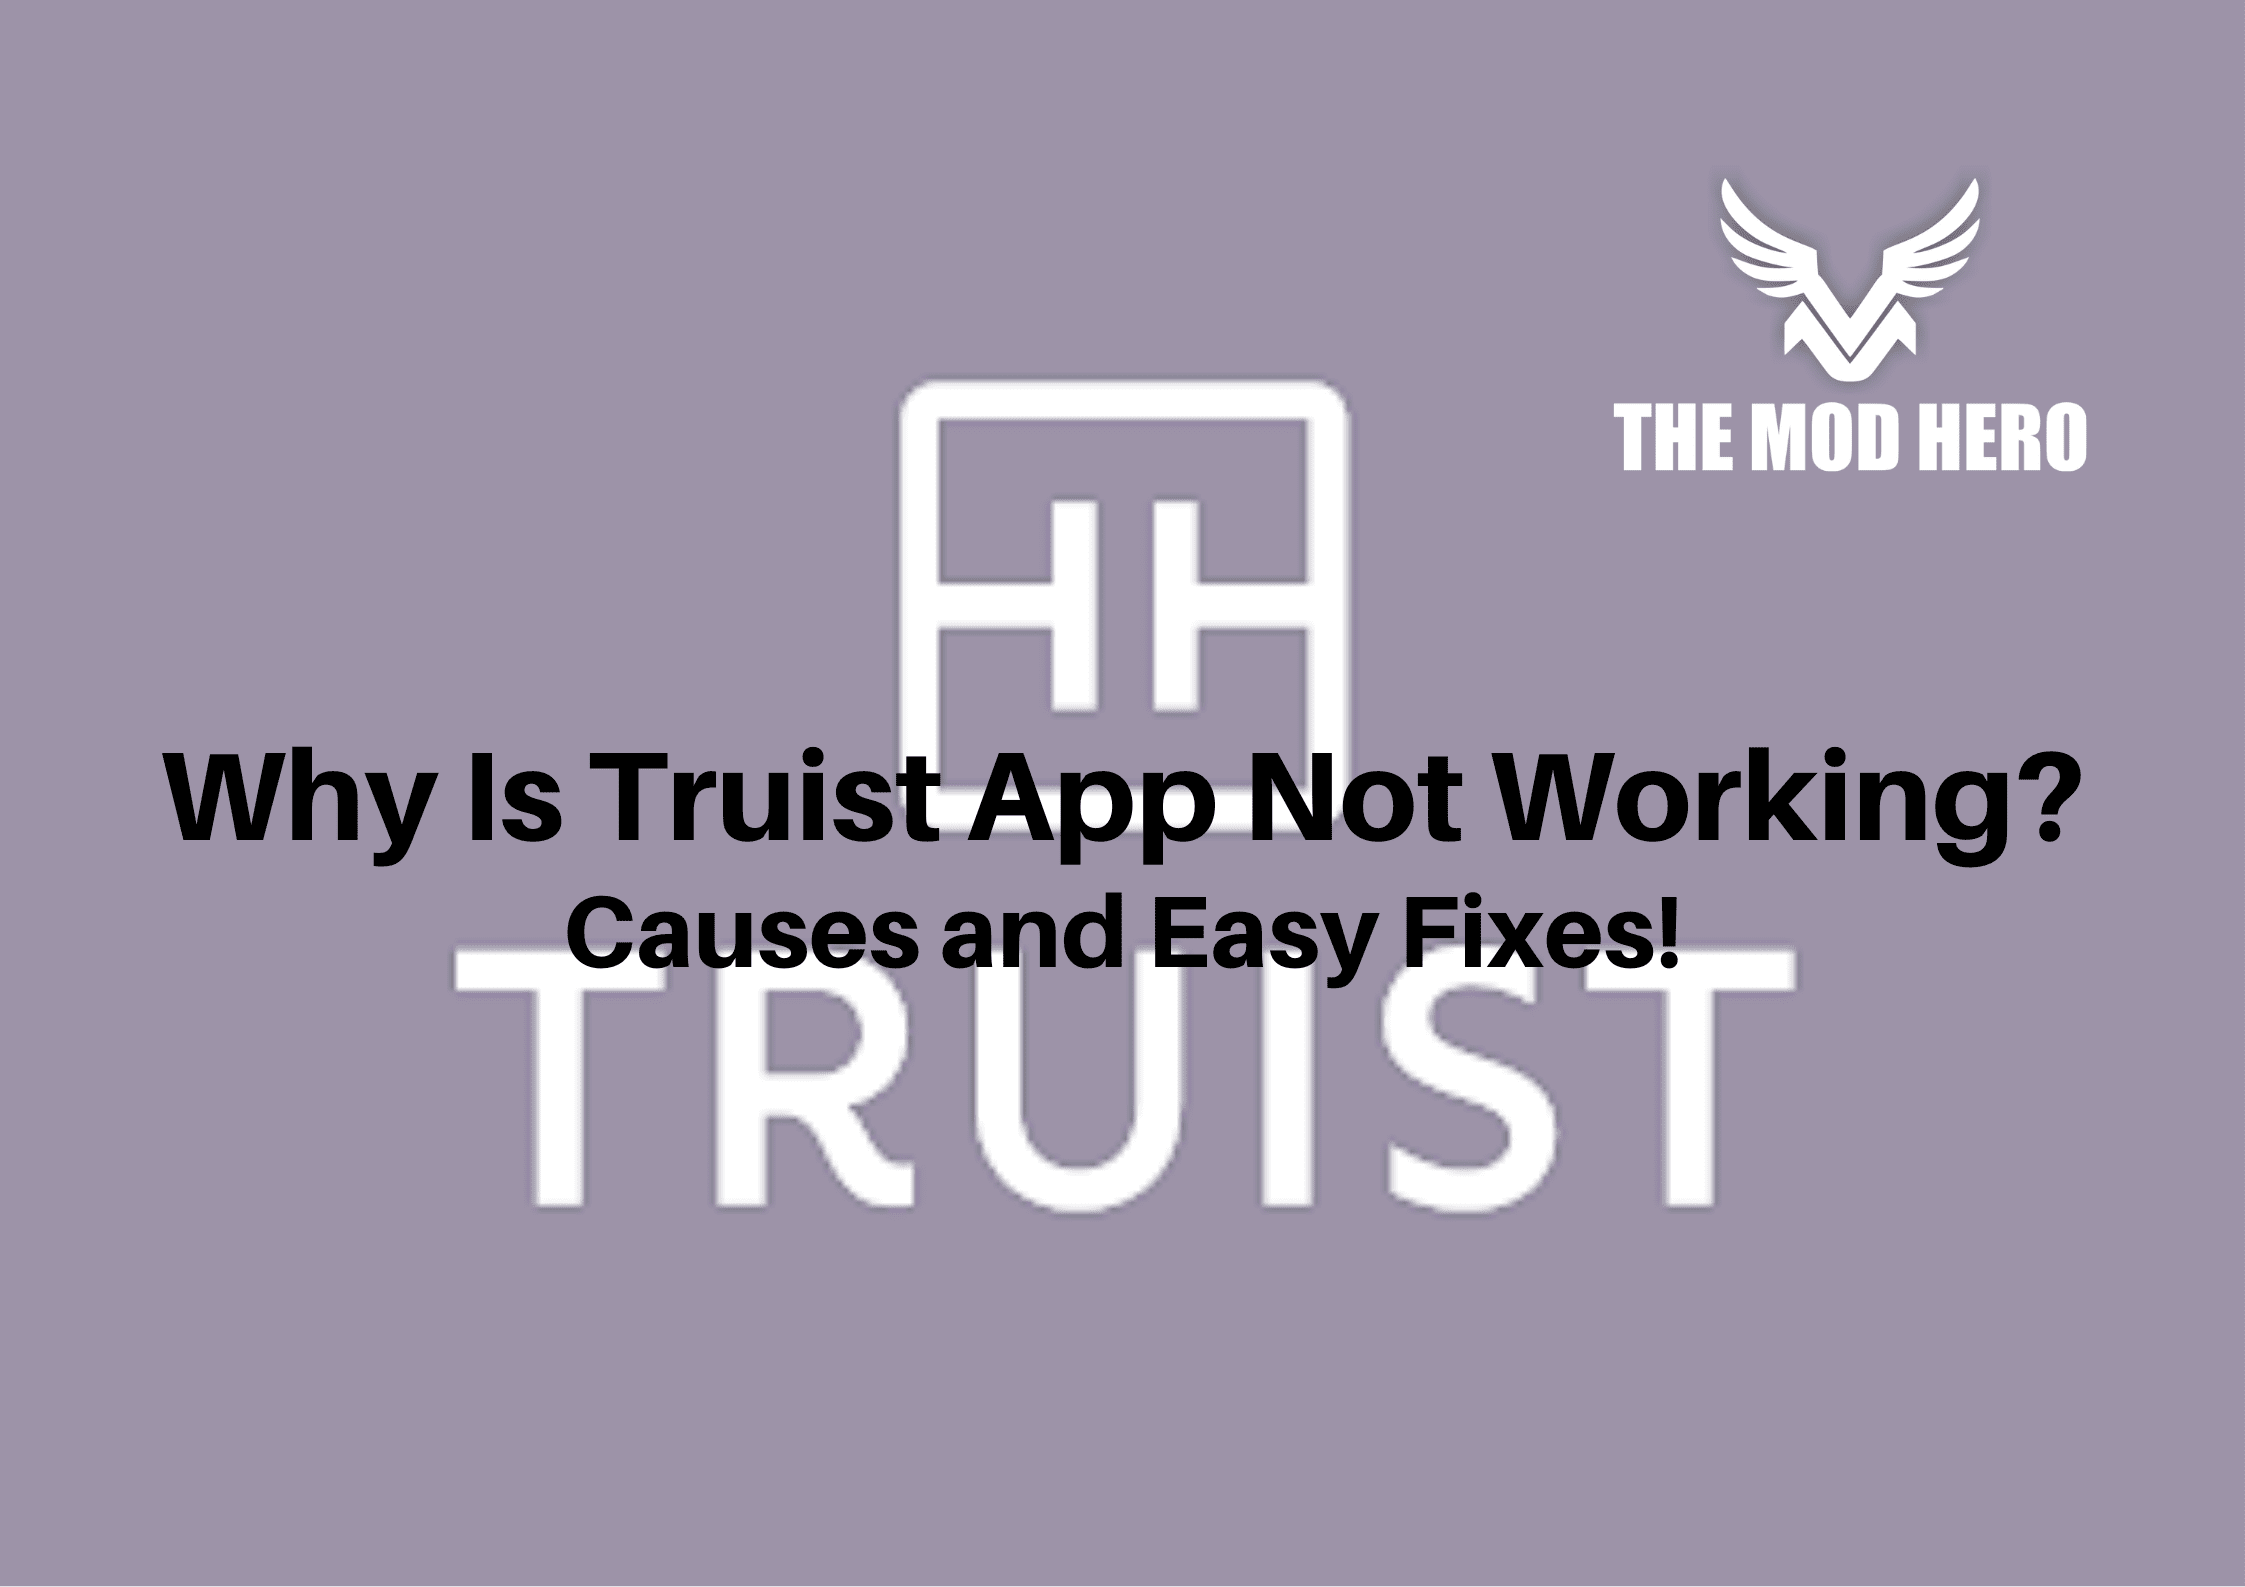 Truist App Not Working